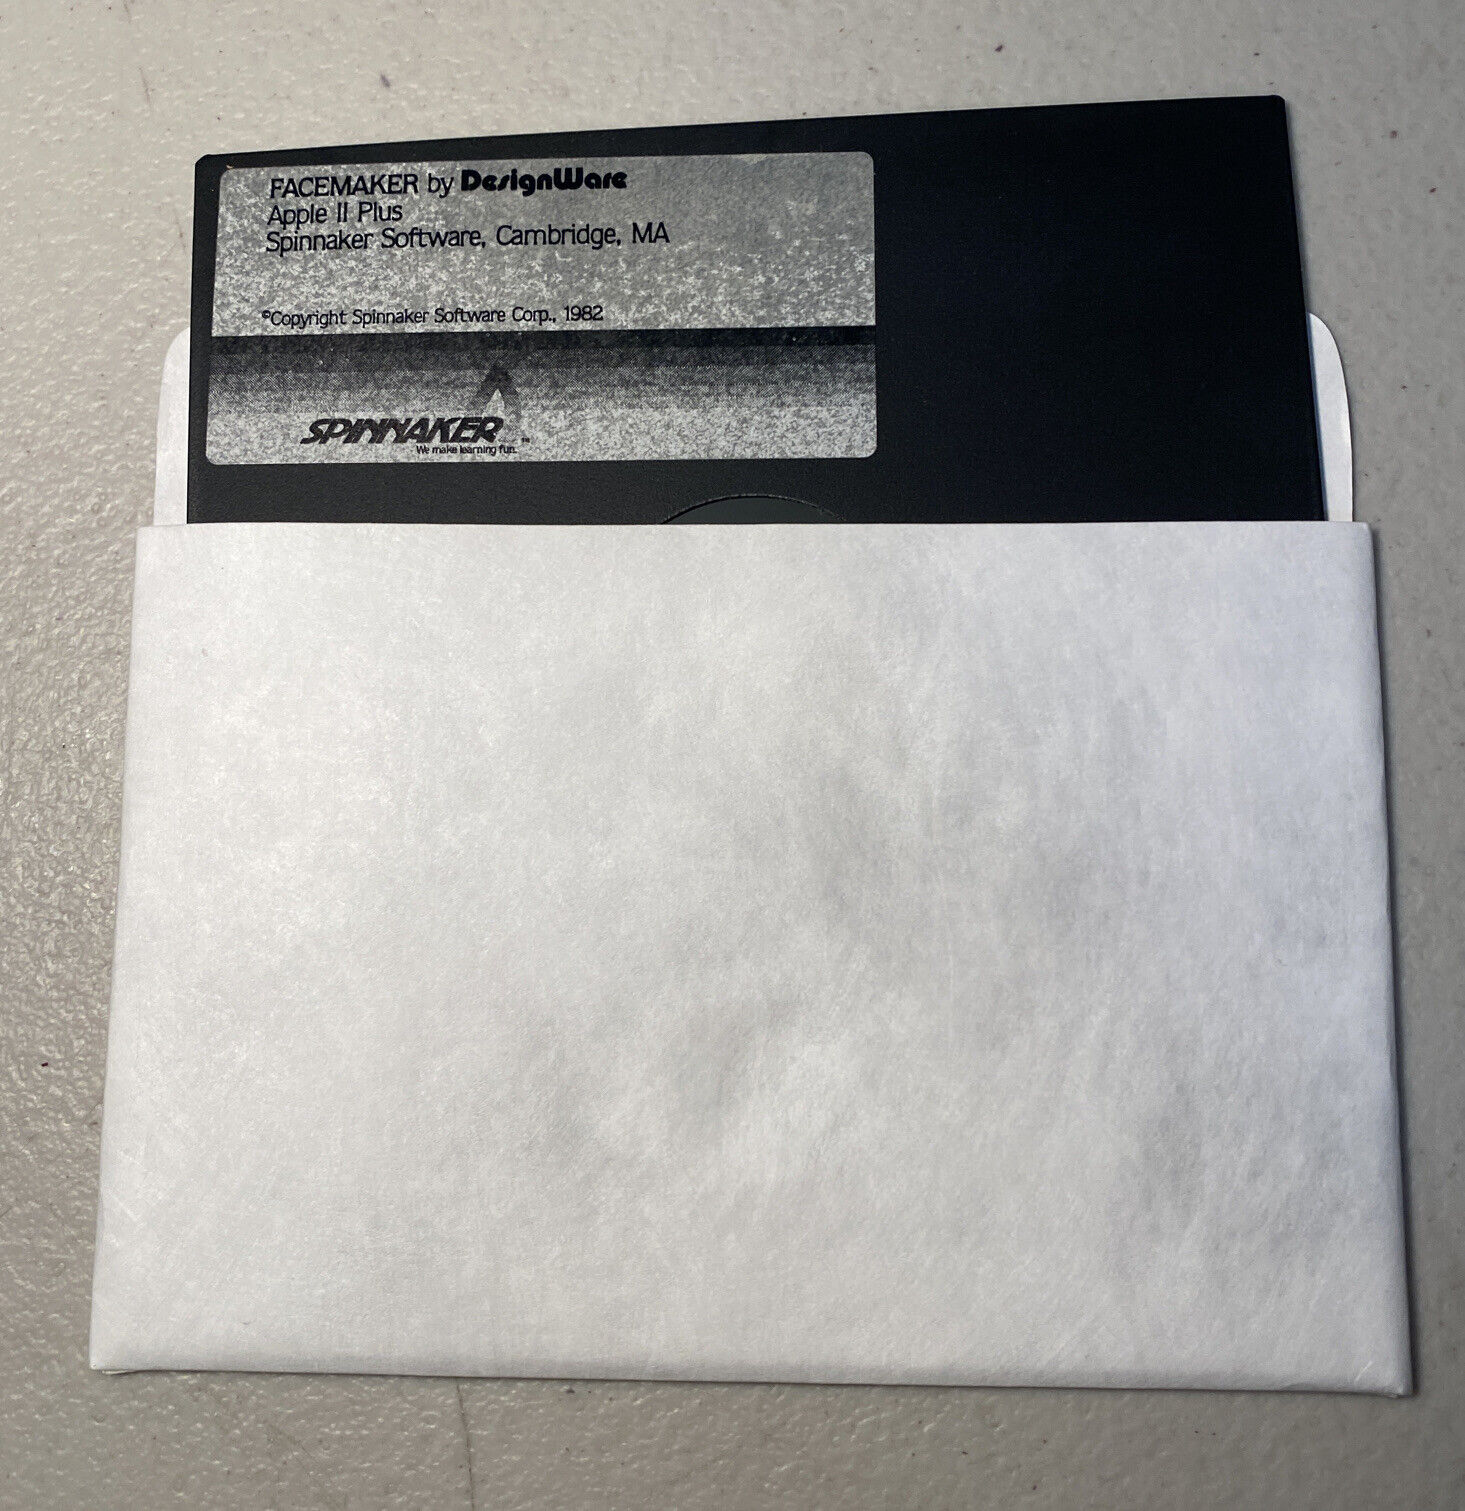 Vintage 1982 Apple II Plus FACEMAKER by DesignWare 5.25” Floppy Disk